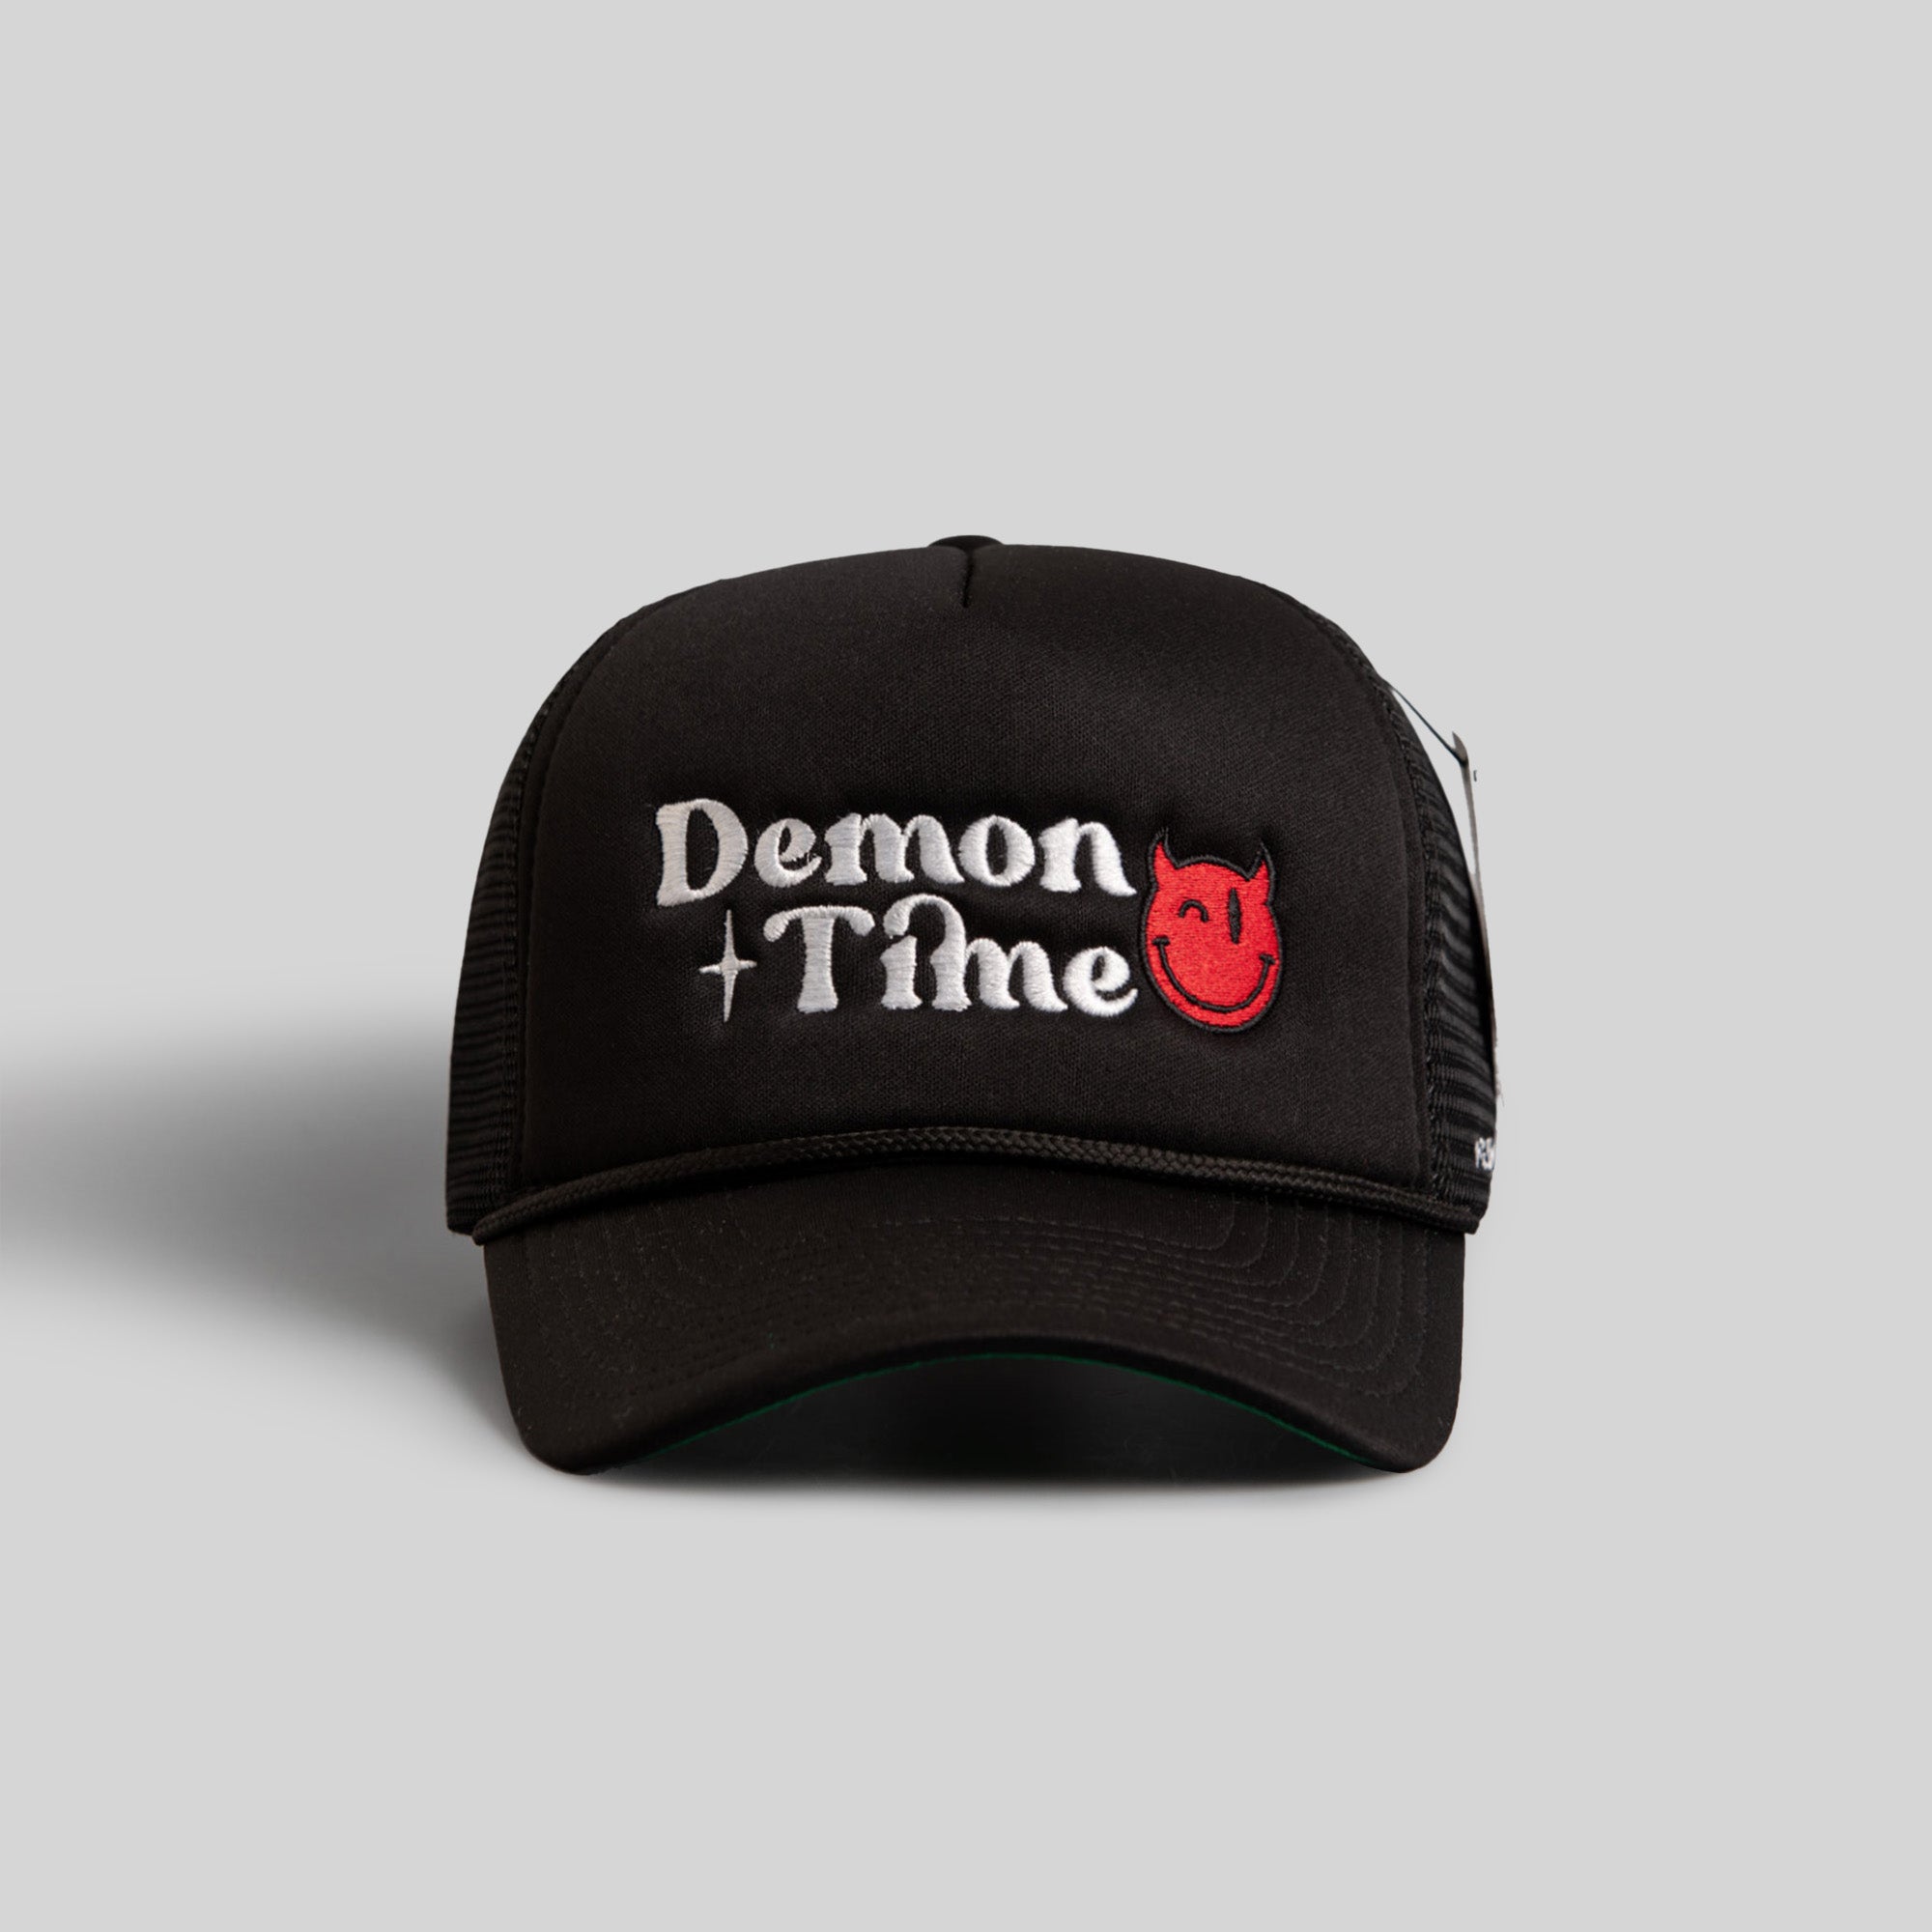 DEMON TIME BLACK TRUCKER HAT - RED DEVIL